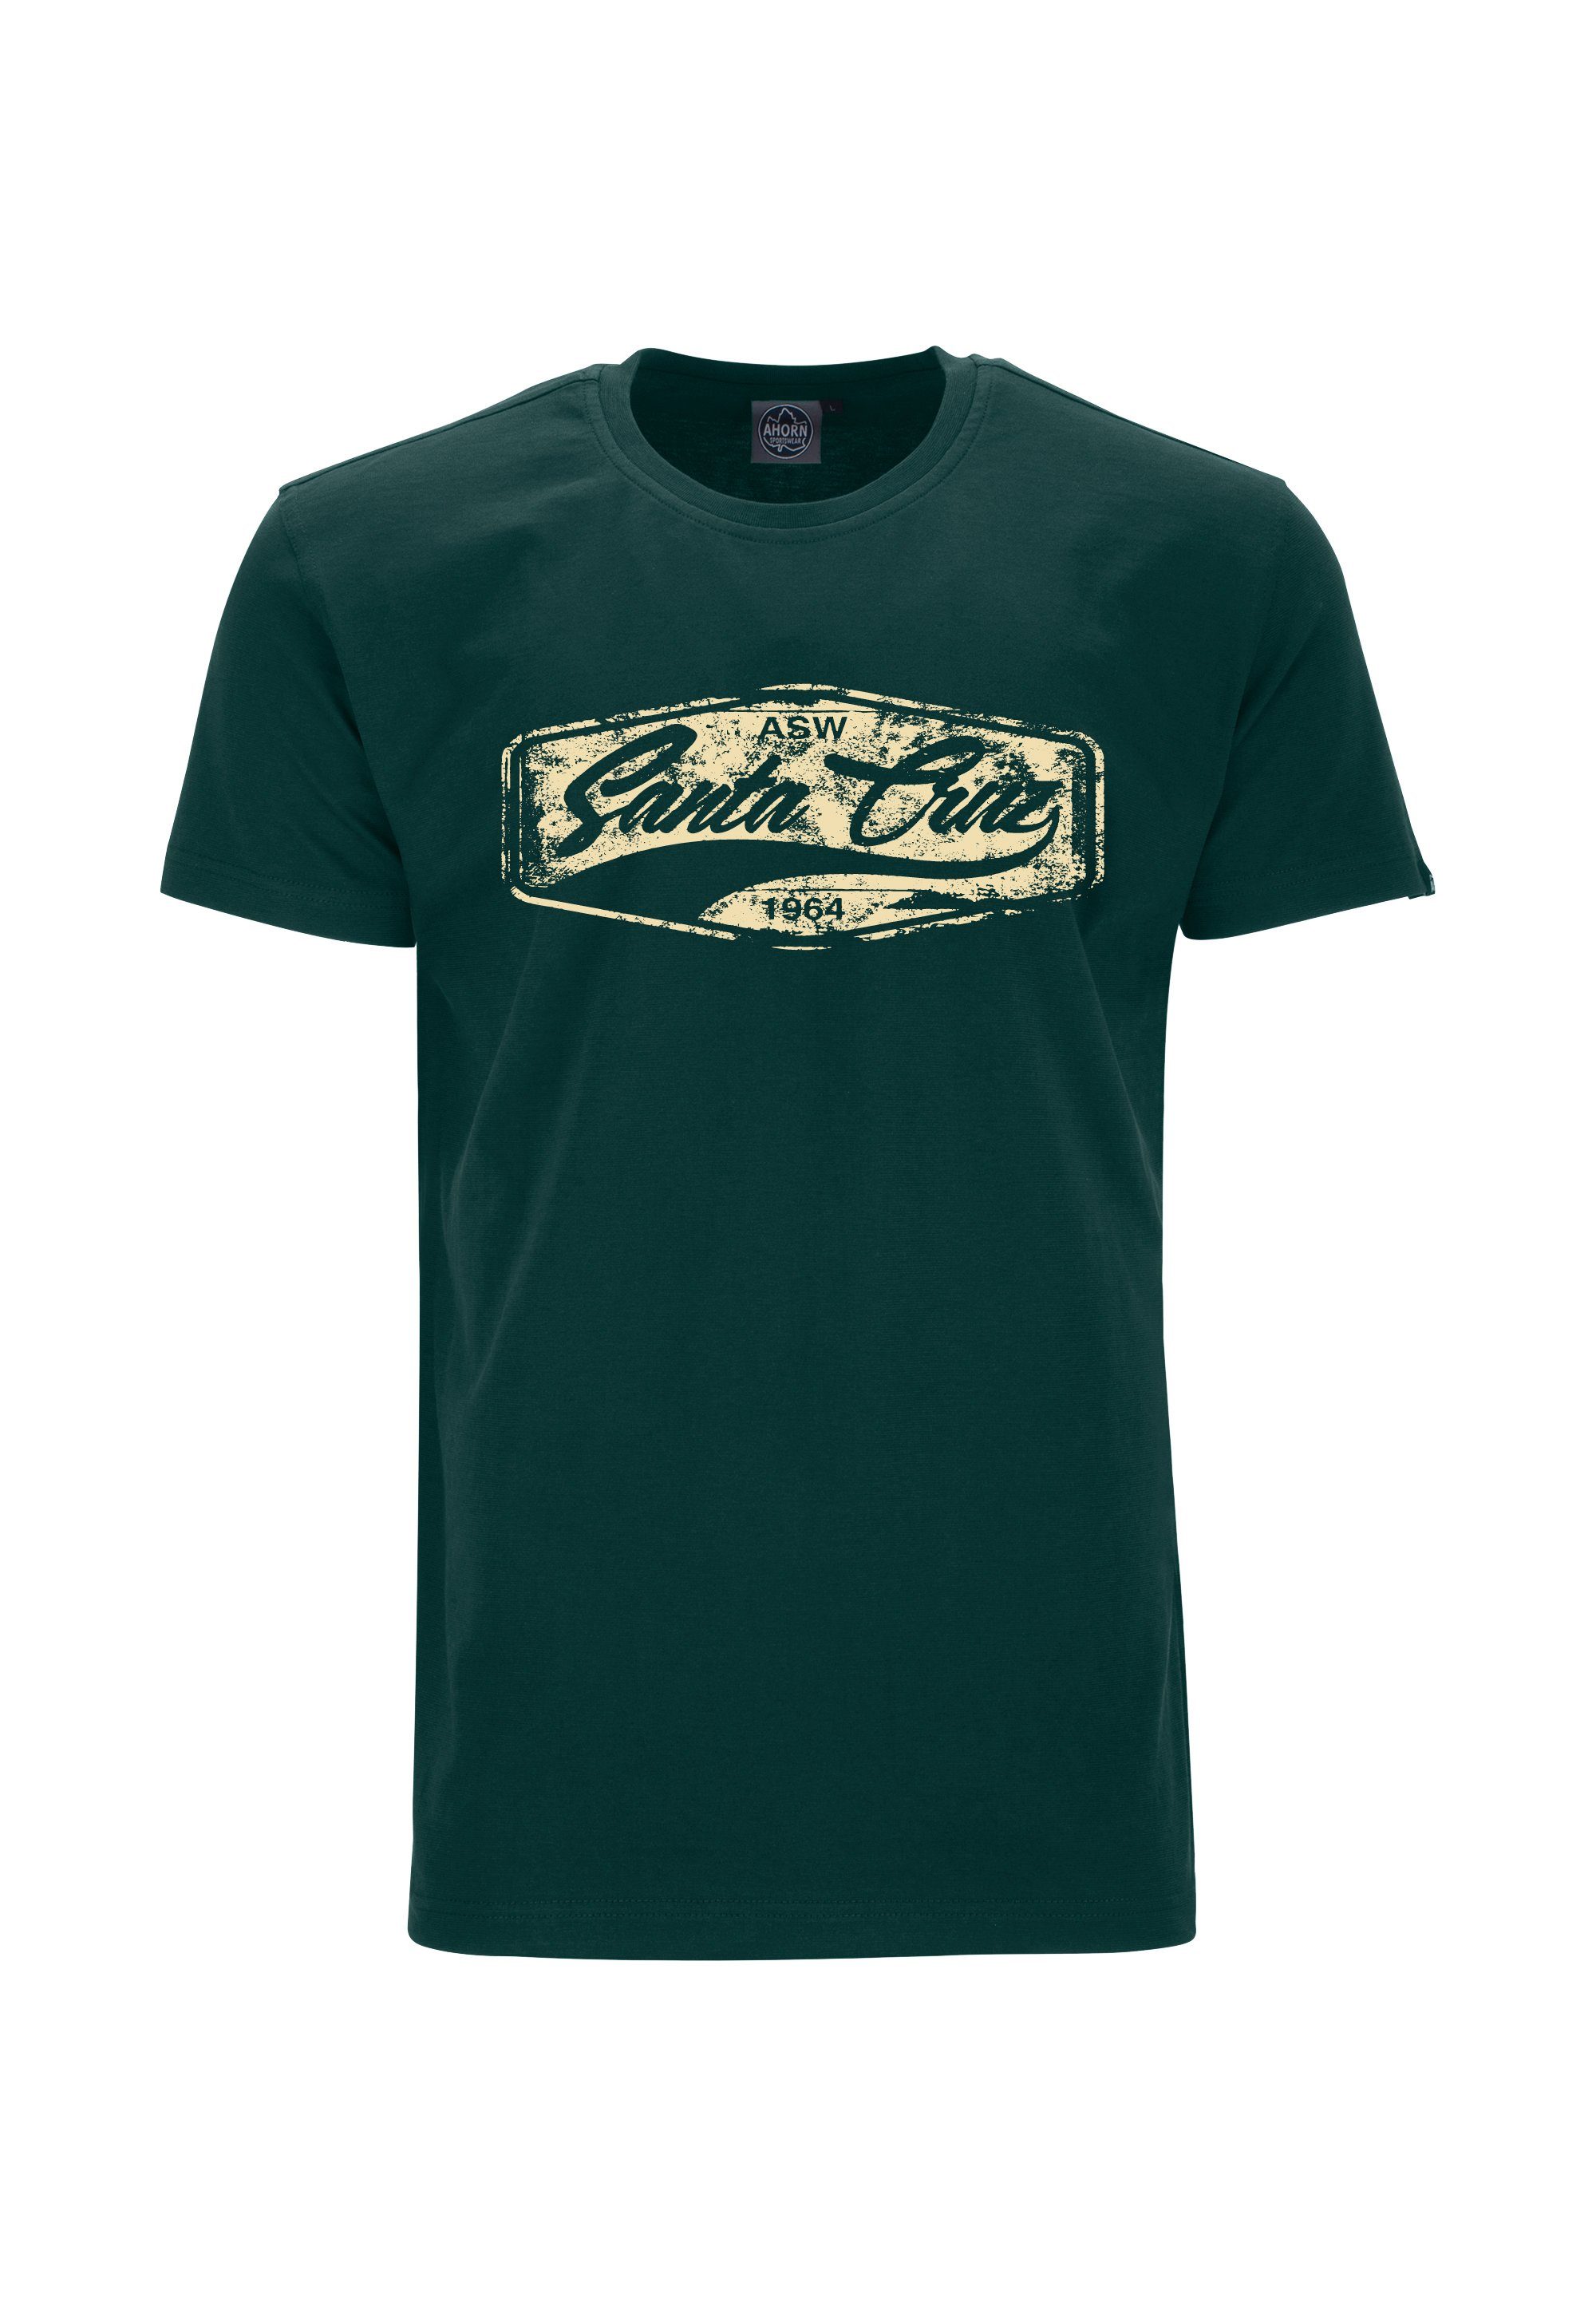 SPORTSWEAR AHORN SANTA CRU modischem dunkelgrün mit T-Shirt Frontprint